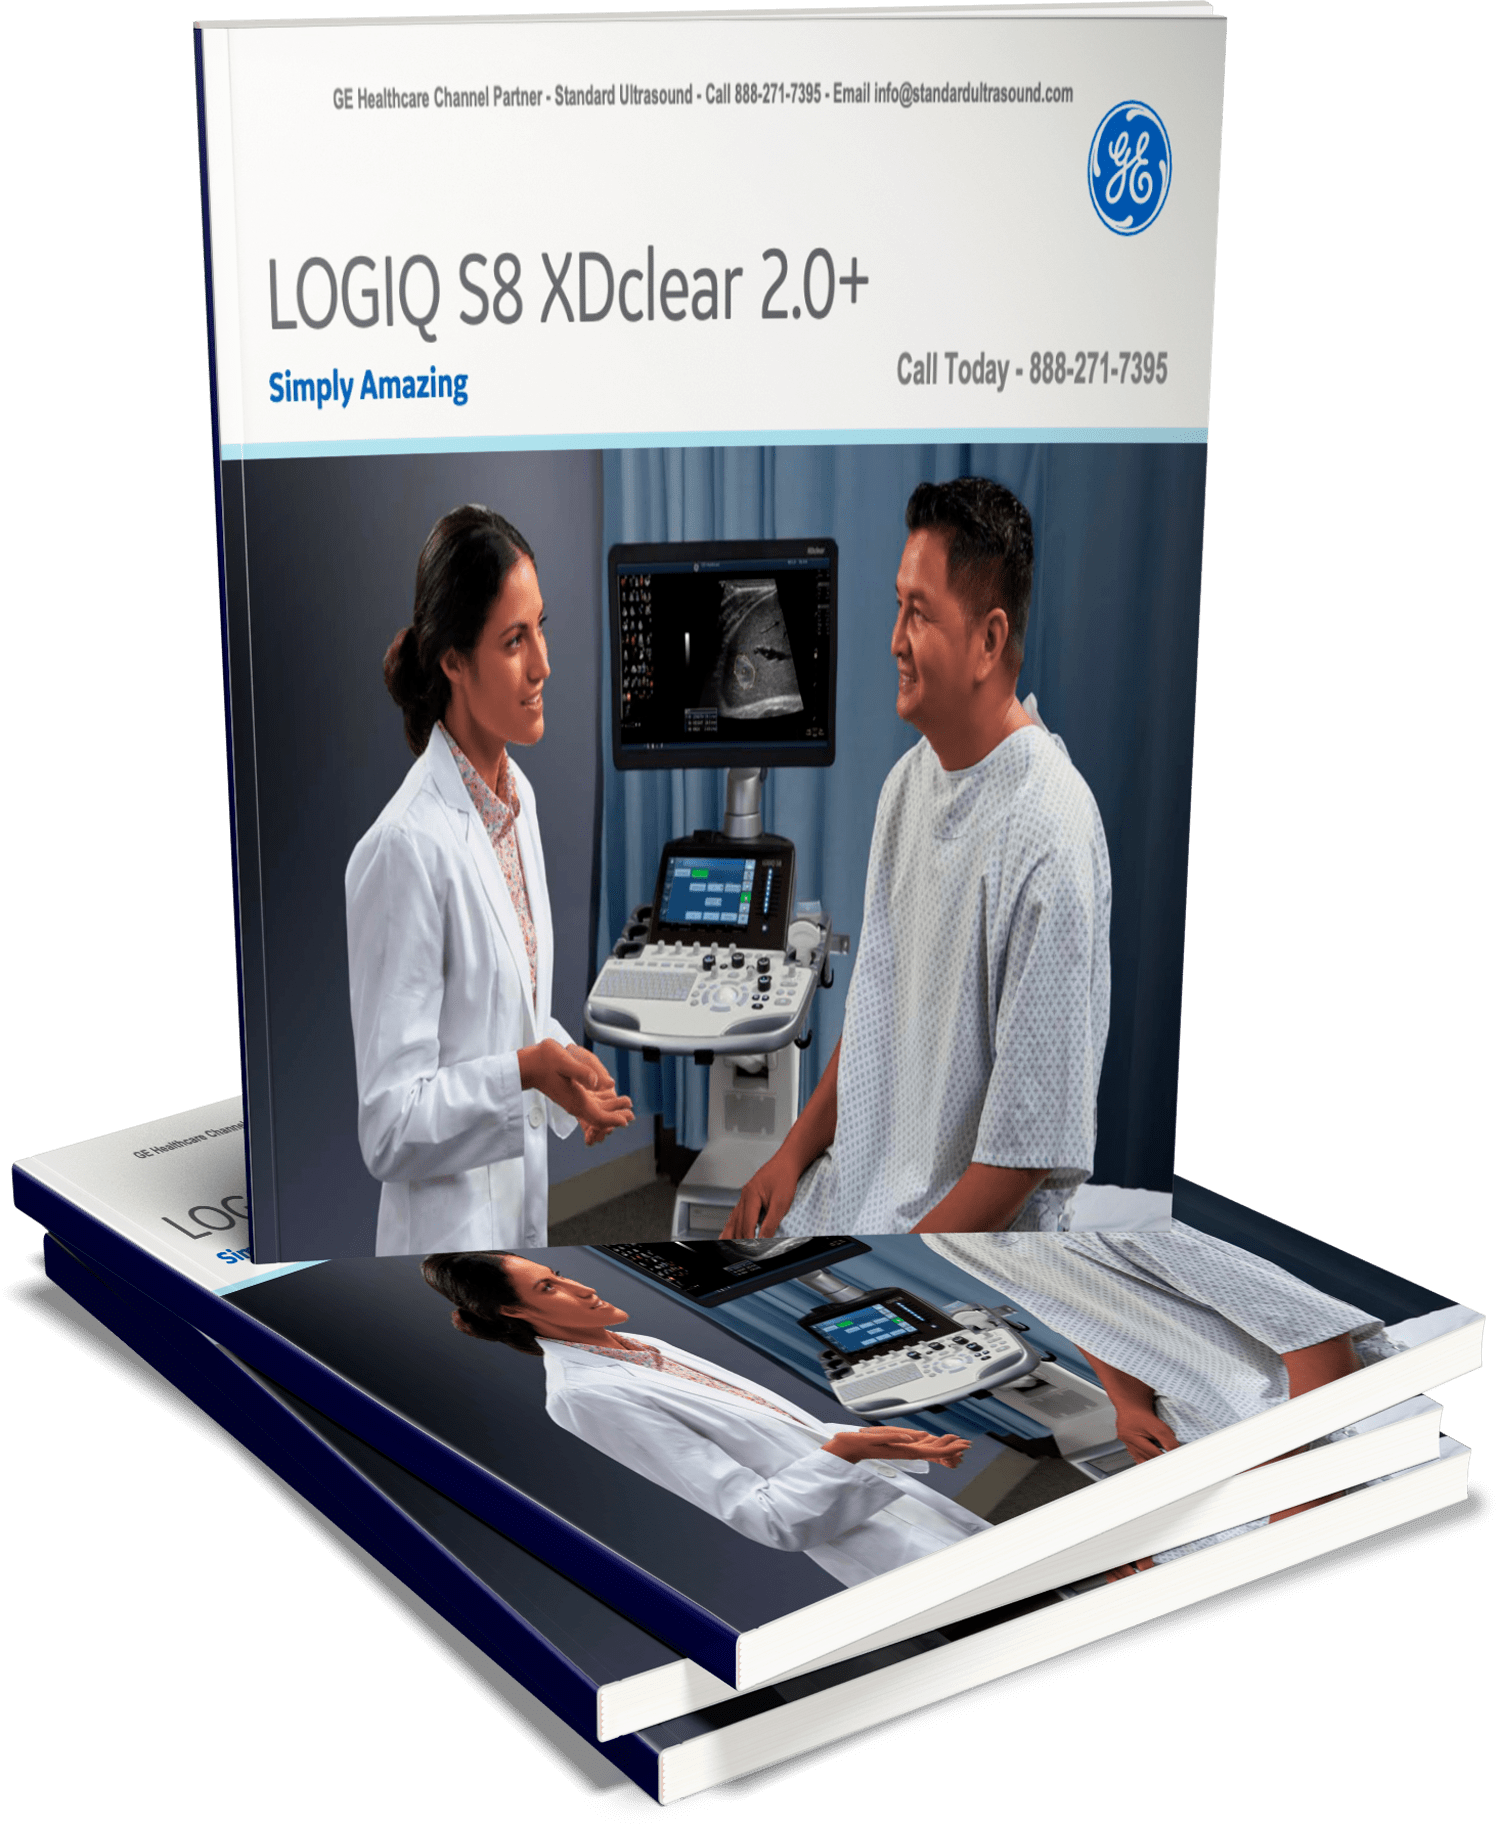 LOGIQ S8 XDclear 2.0